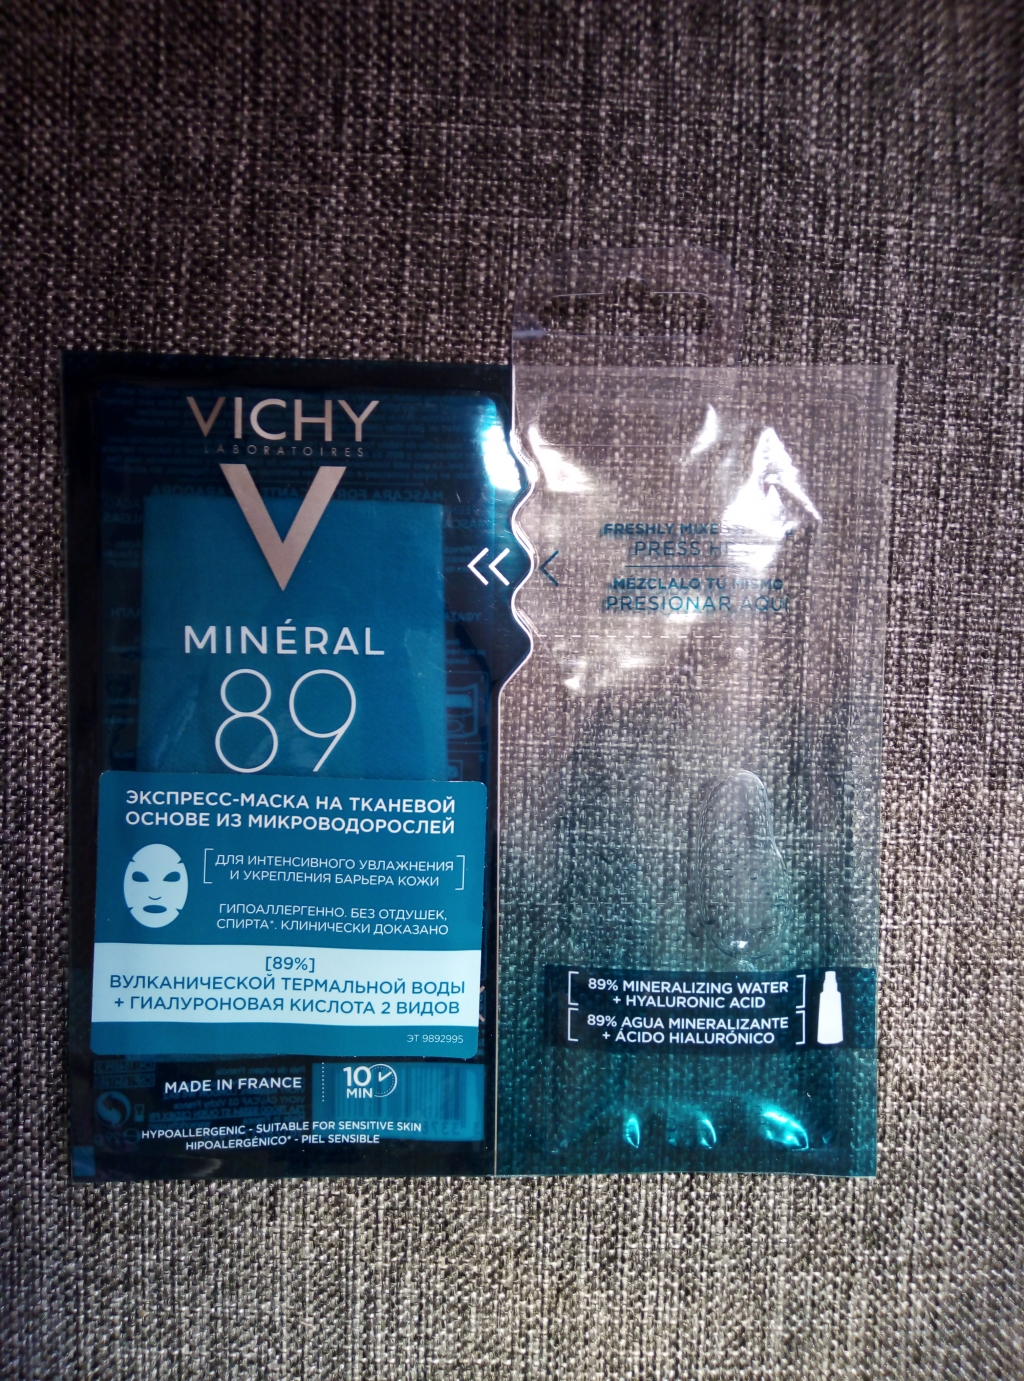 Vichy - Tканевая маска для лица Mineral 89 Vichy